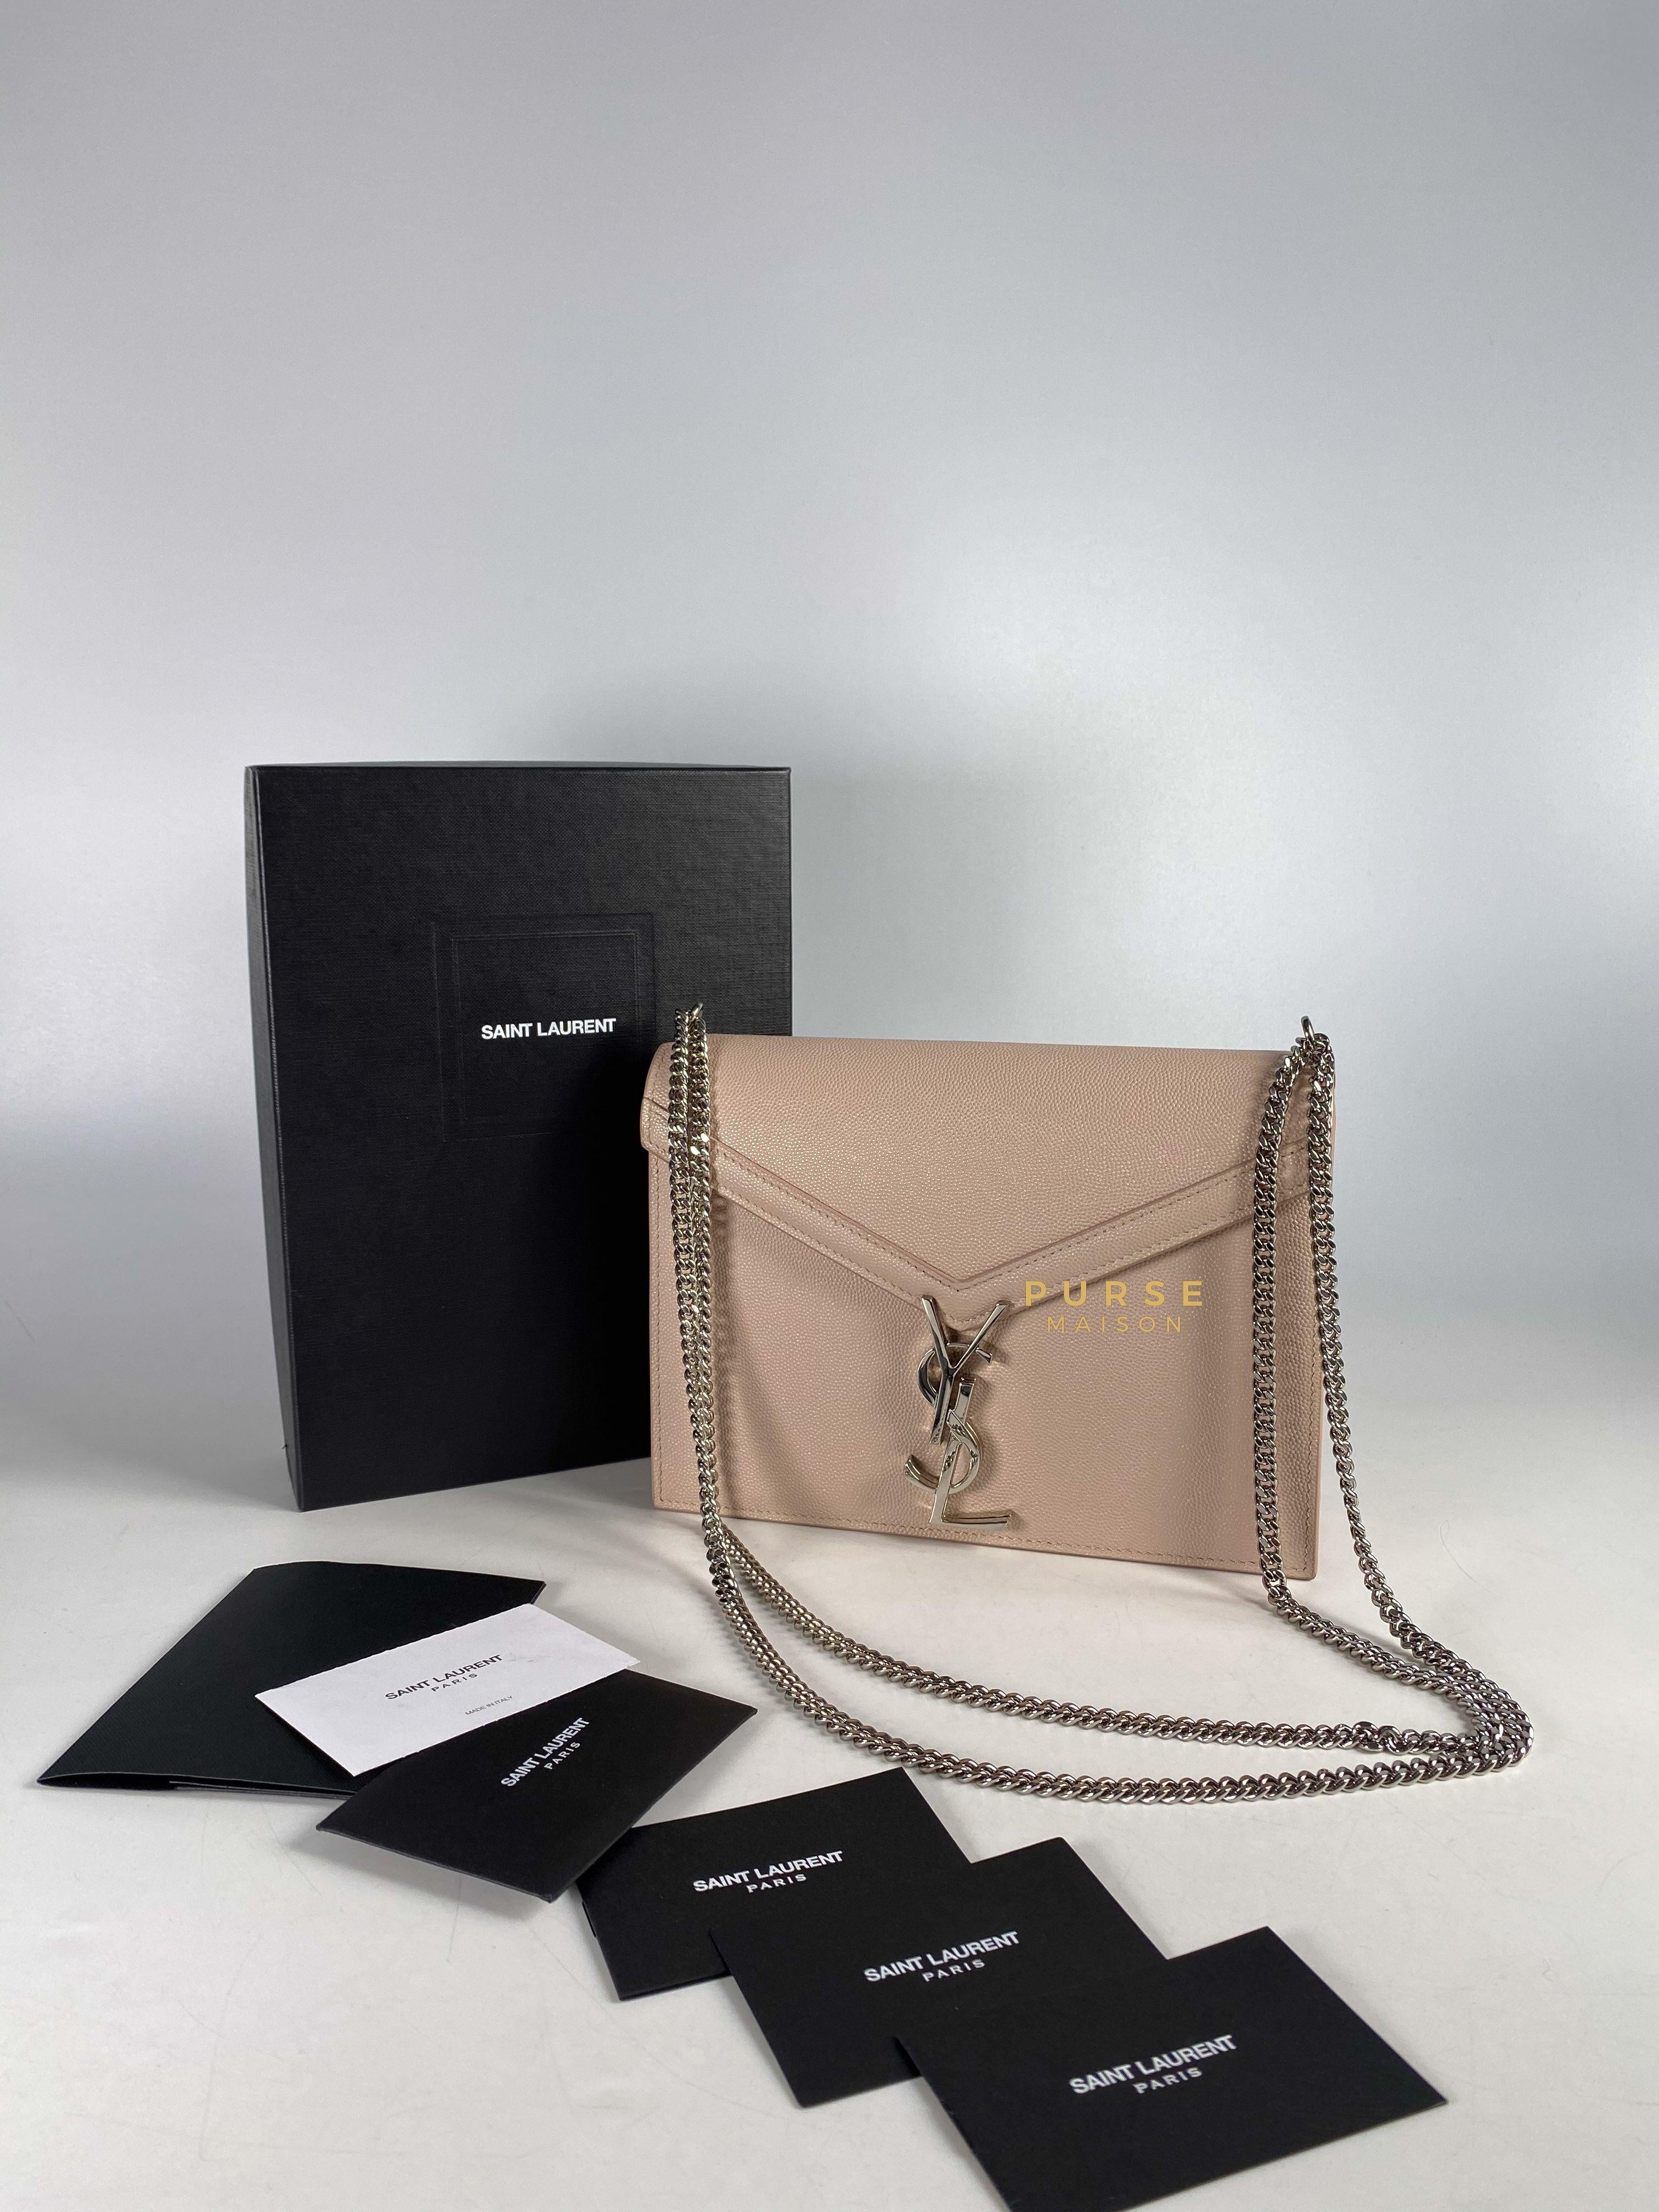 Handbags for Women | New Arrivals | Saint Laurent | YSL.com